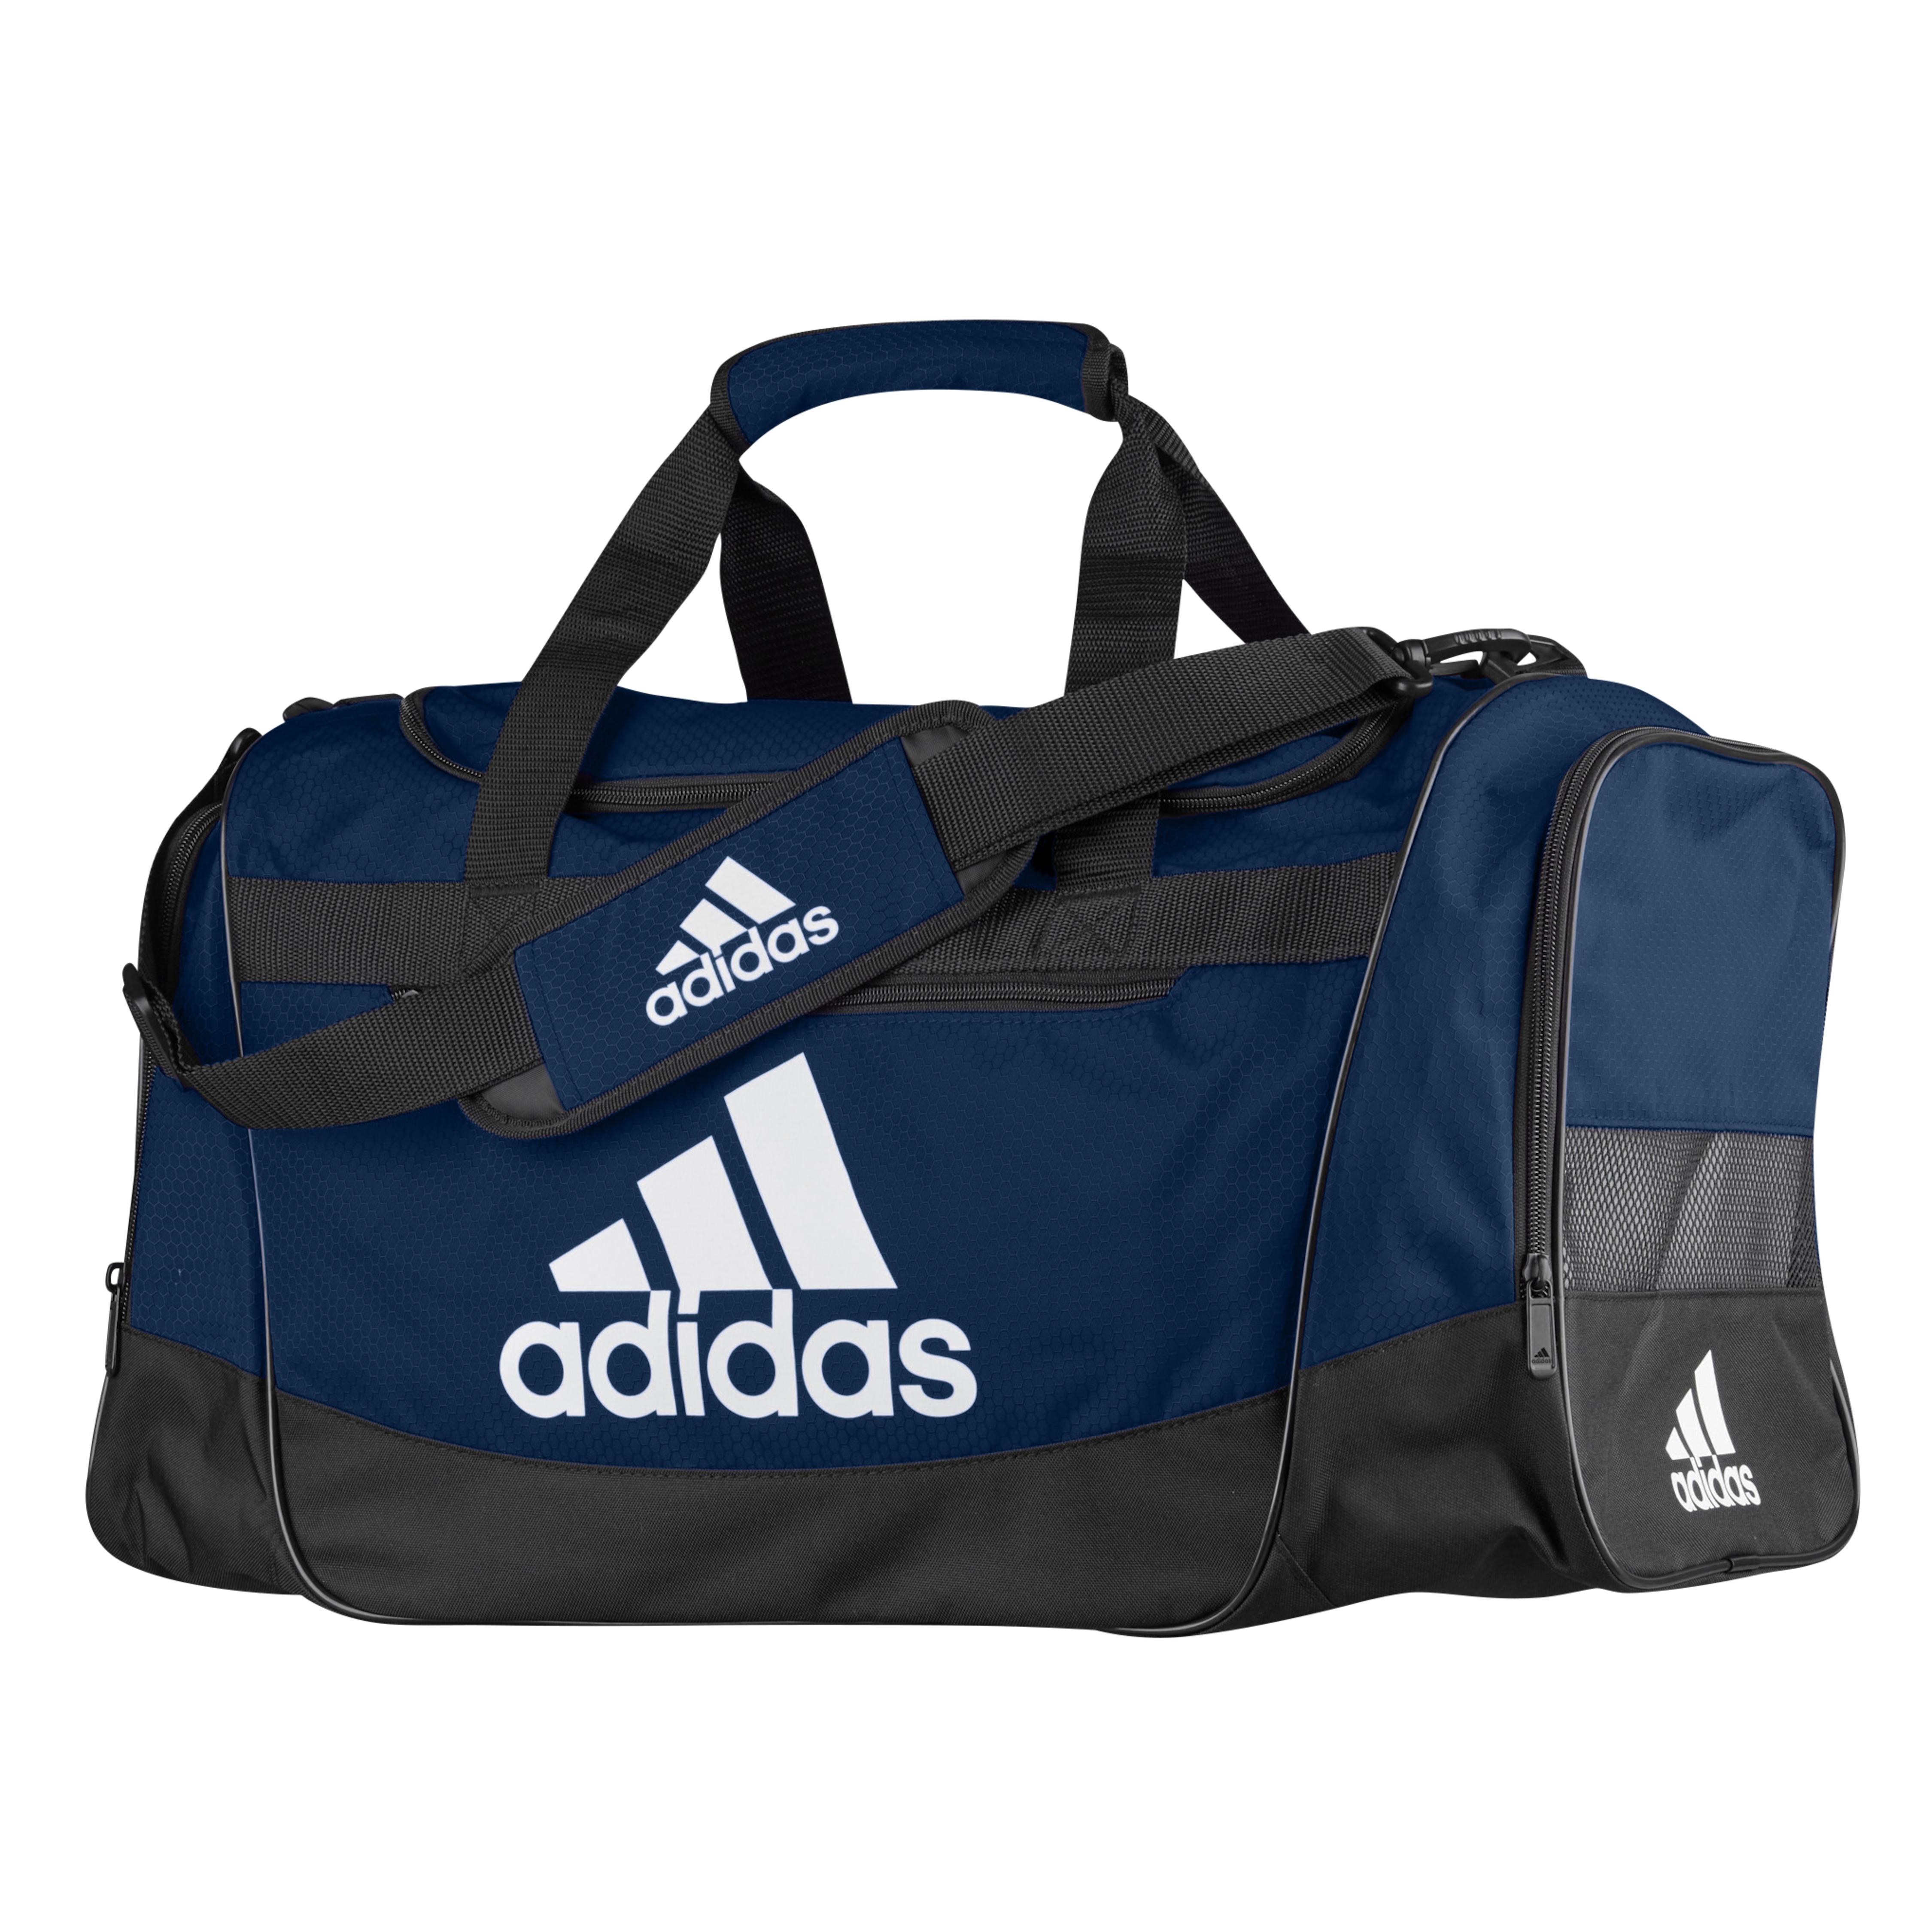 adidas Synthetic Defender Iii Medium Duffel Bag in Navy (Blue) for Men -  Lyst